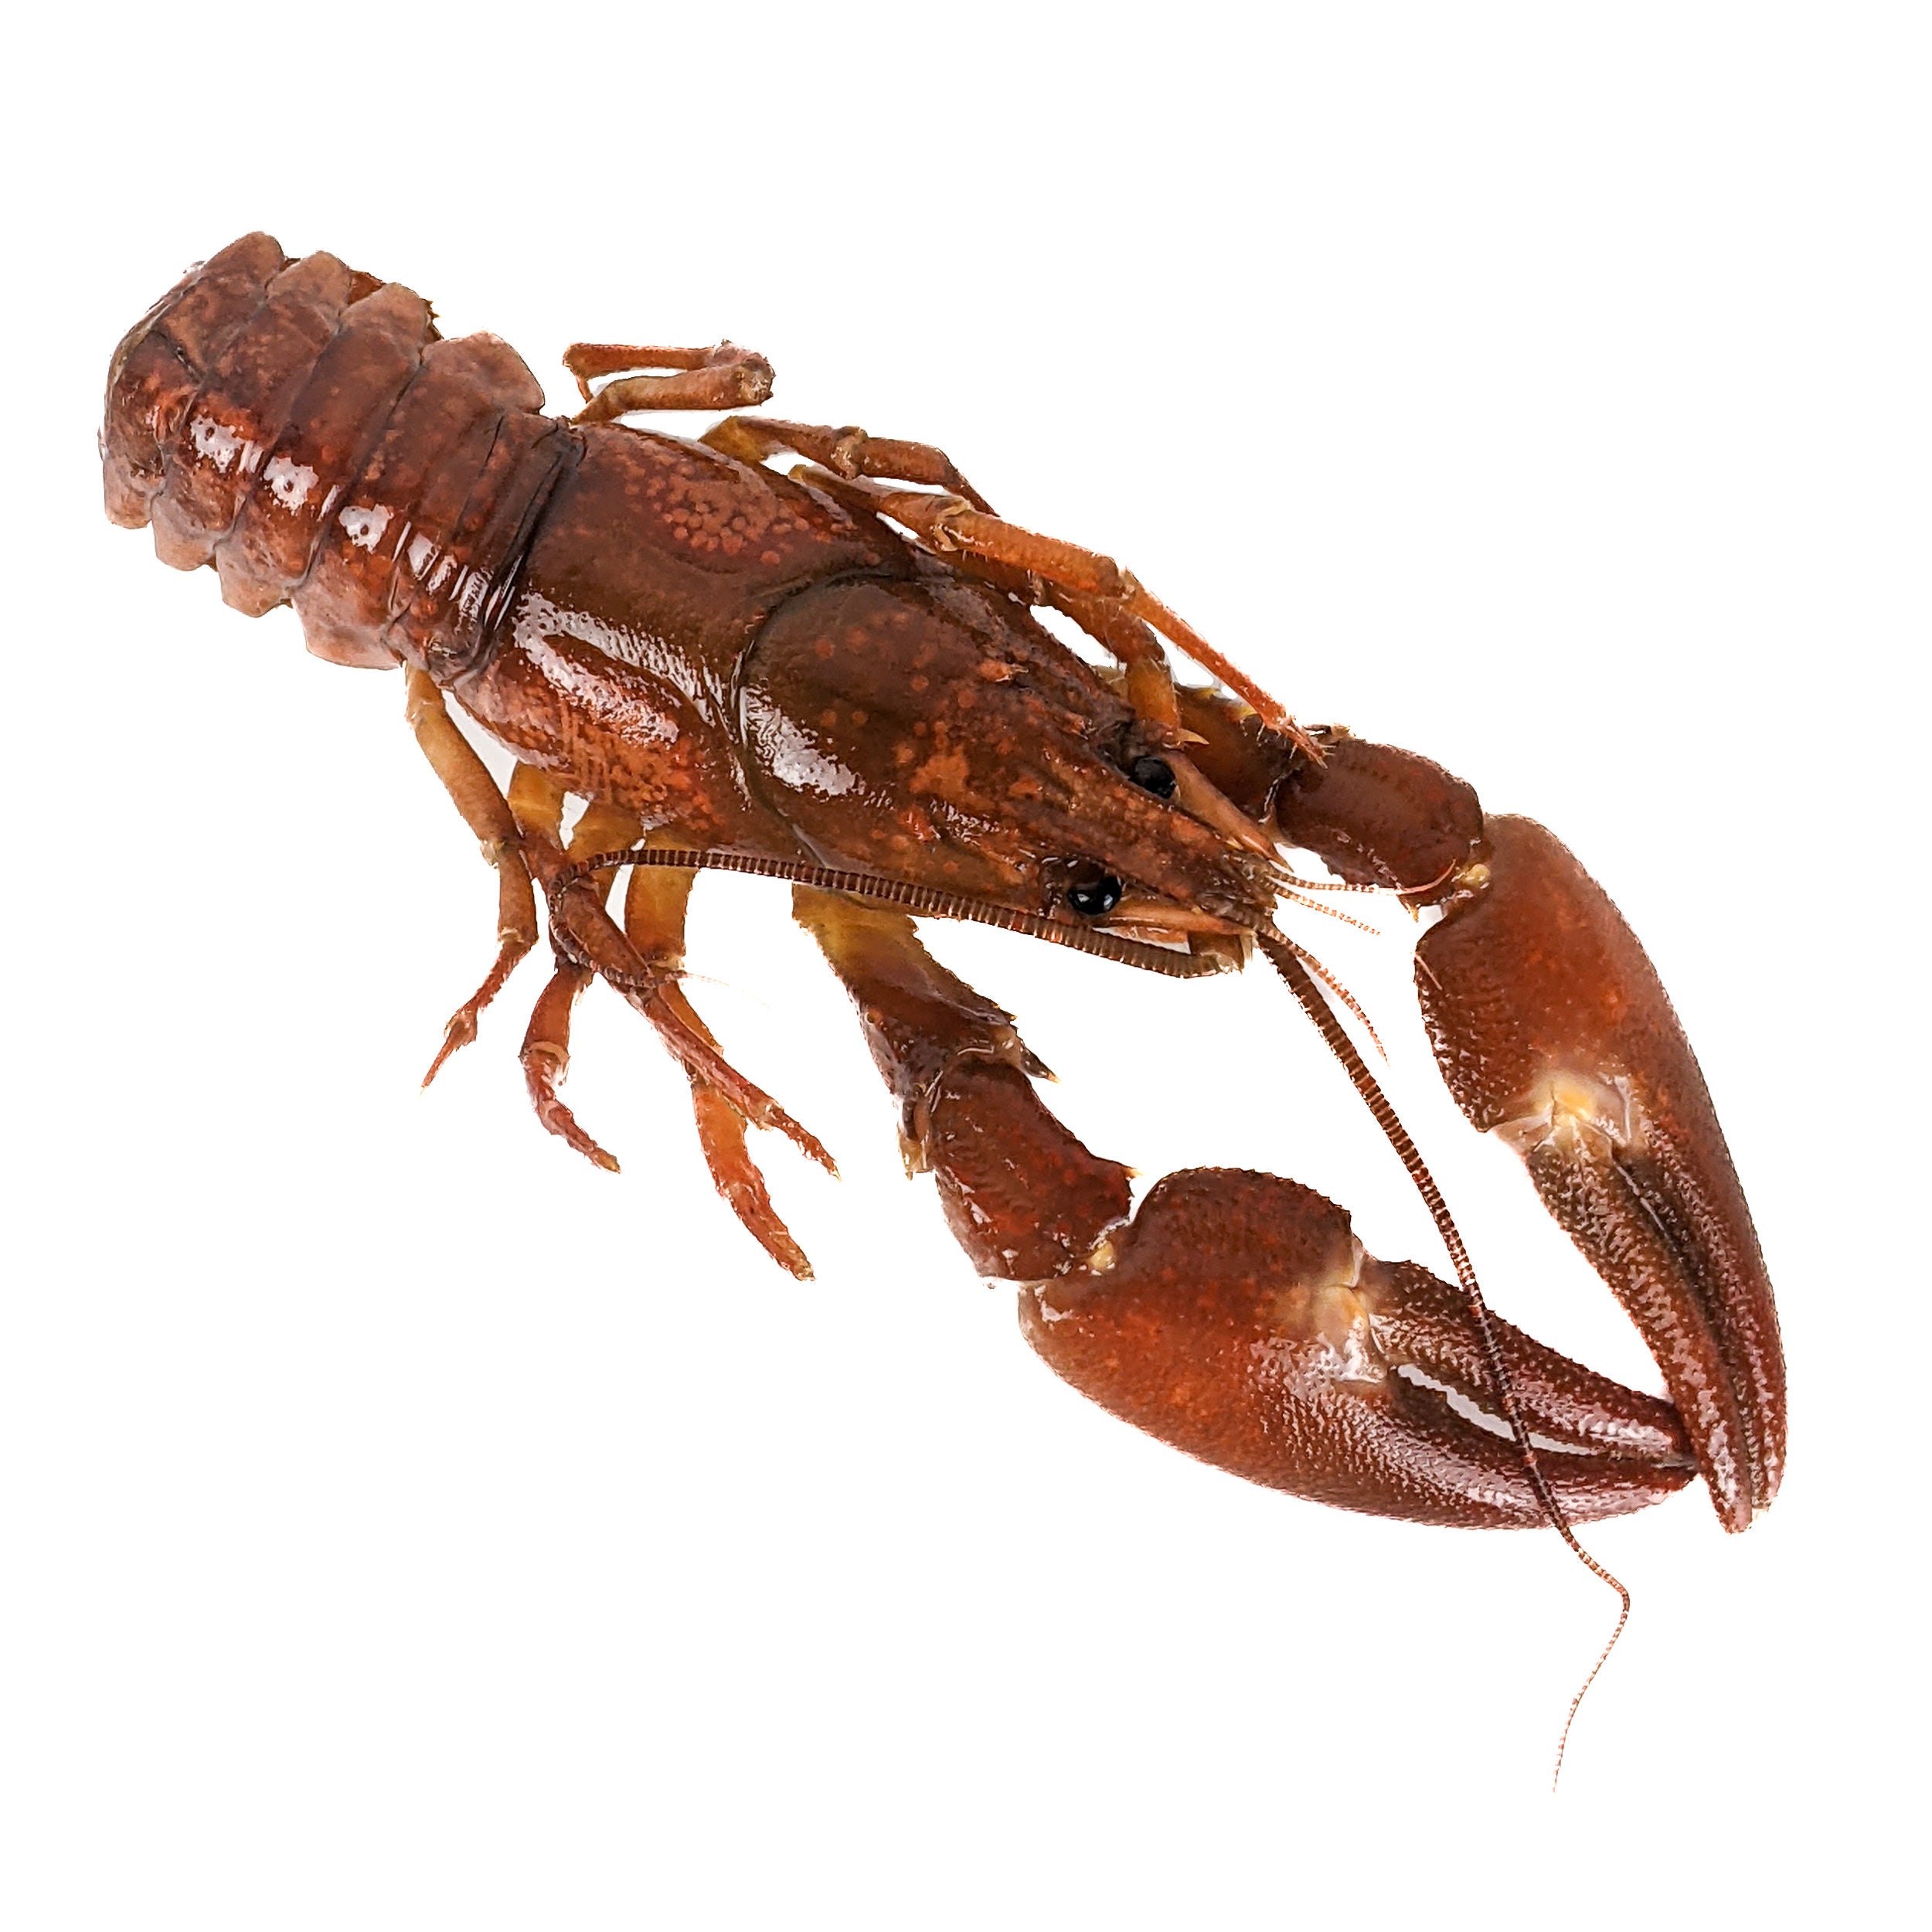 Crayfish LRG taxidermy crawfish crawdad mountain lobster mudbugs